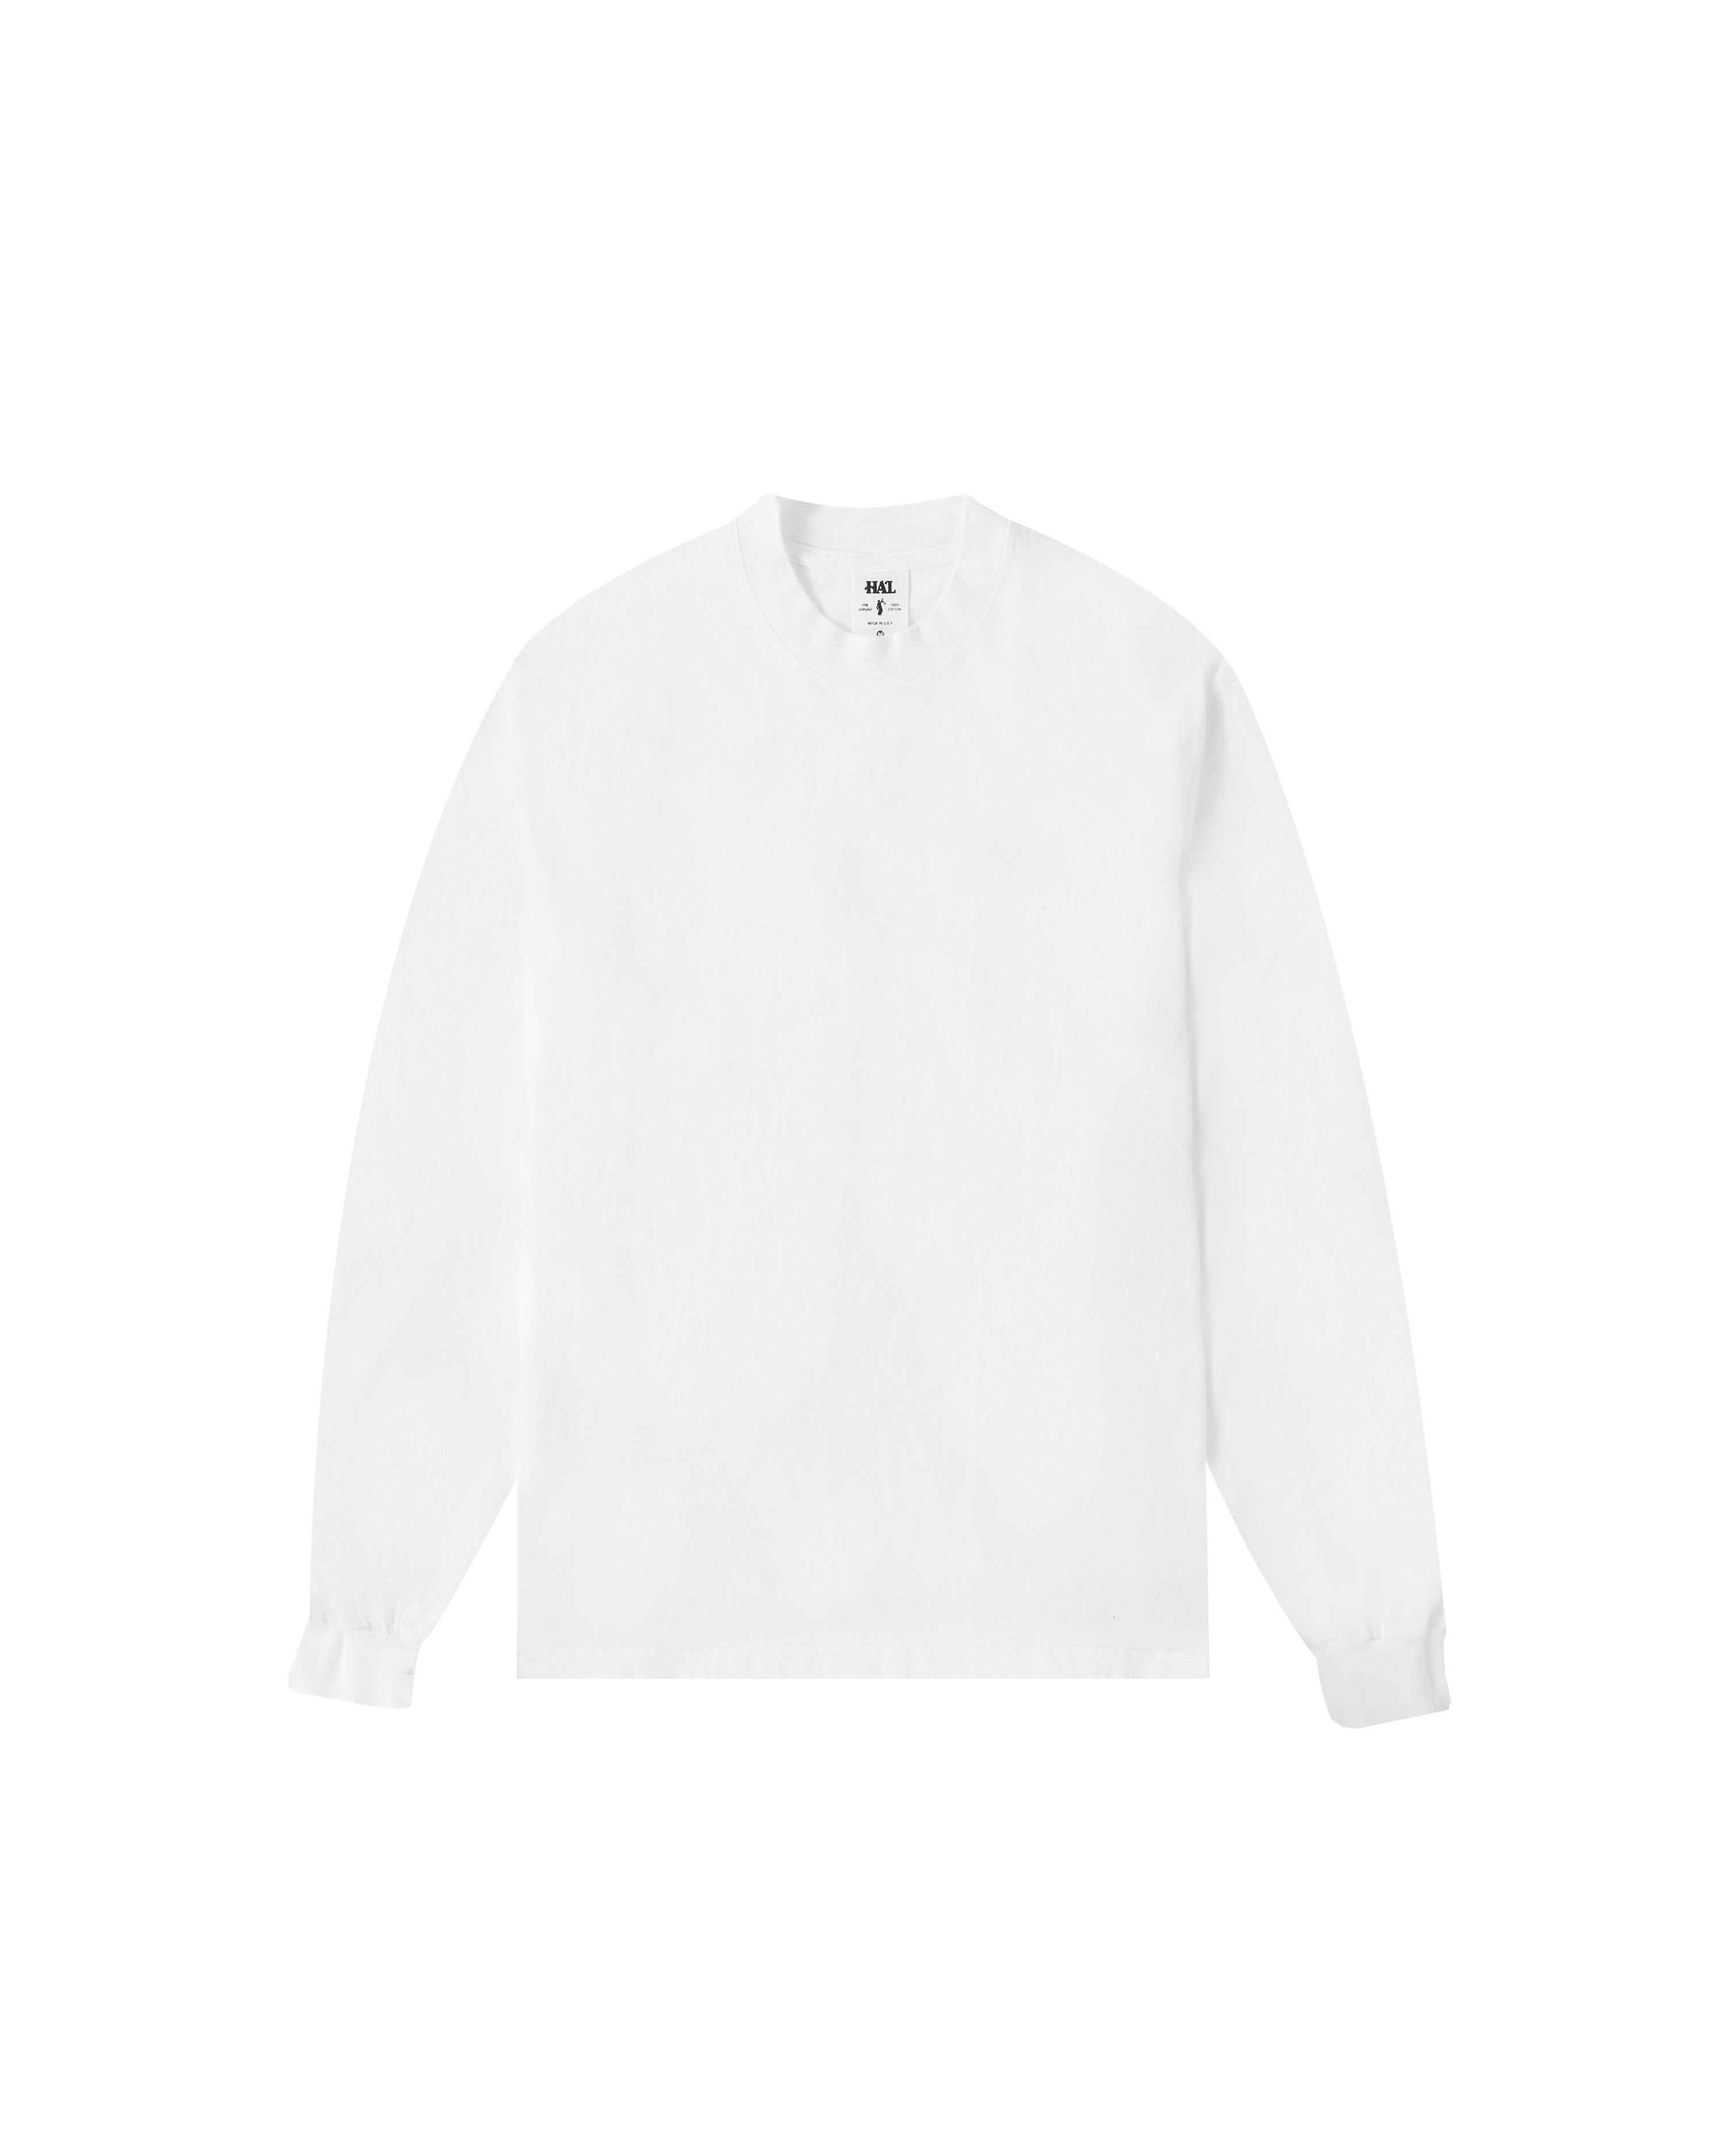 Simple L/S T-shirt - White